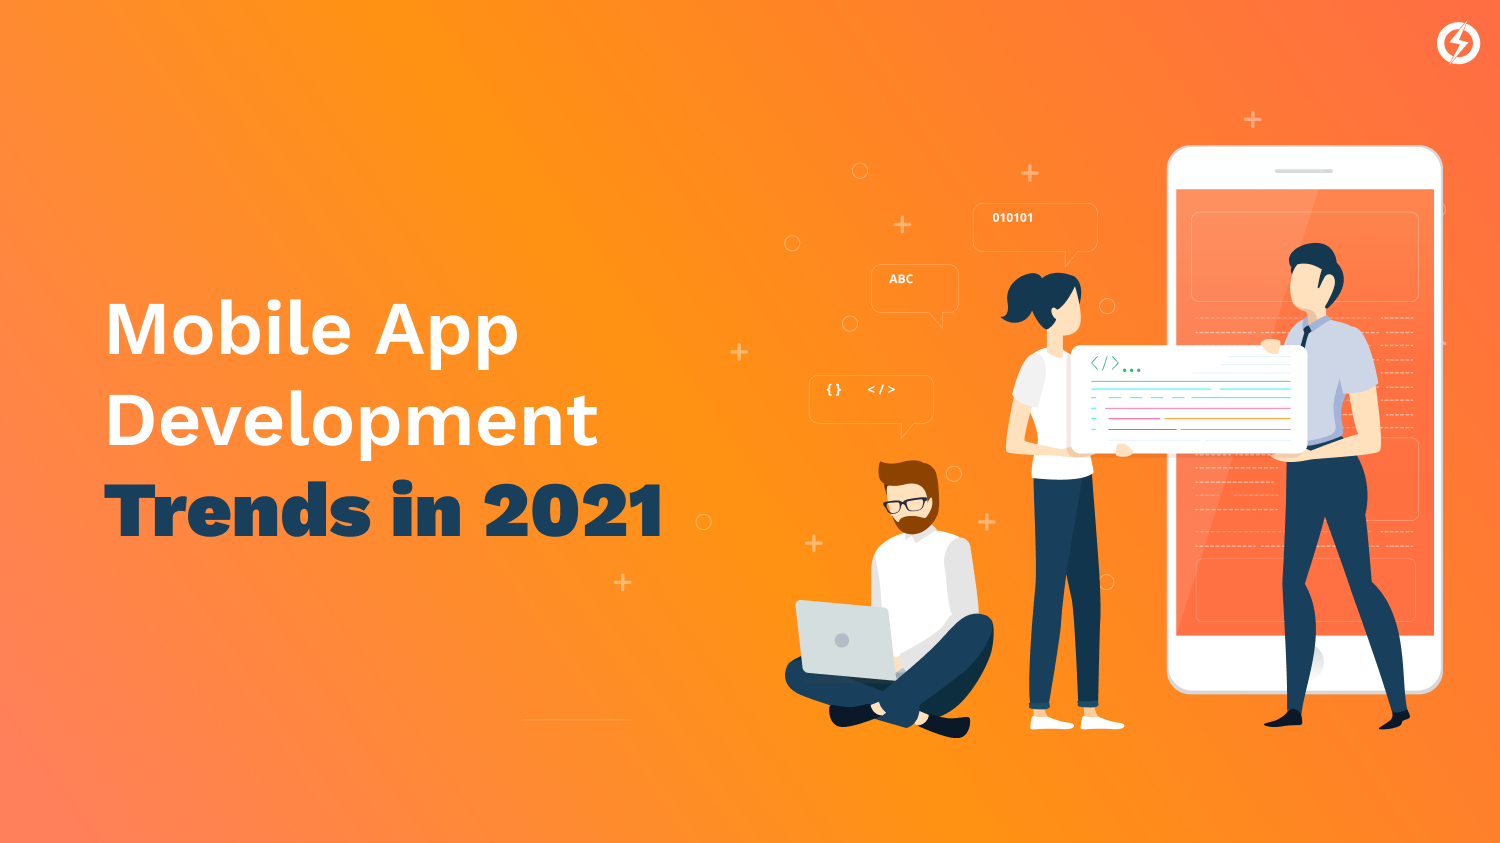 Mobile app development trends in 2021